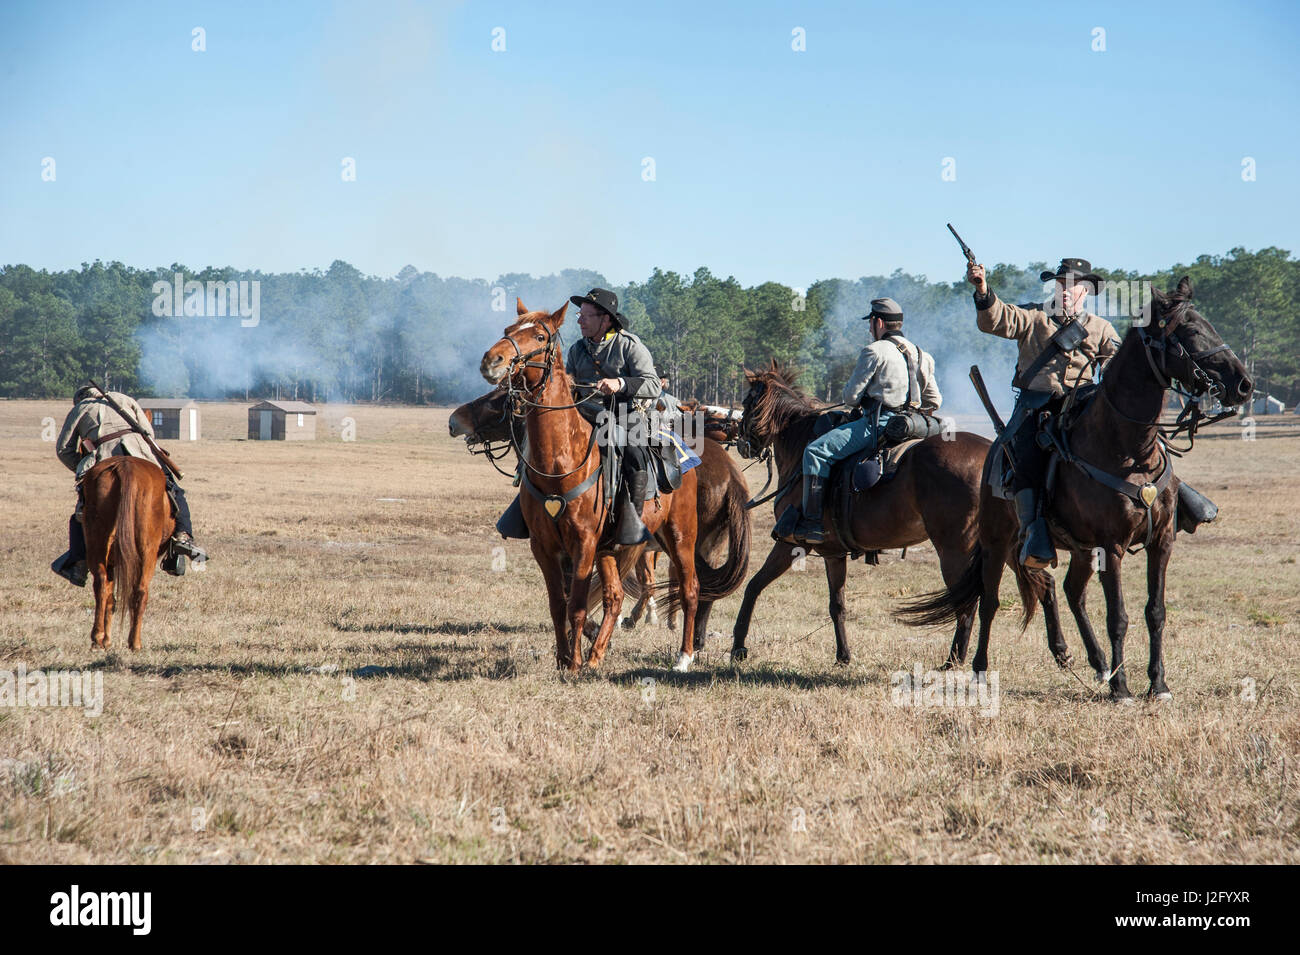 Horse back civil war fighting Stock Photo